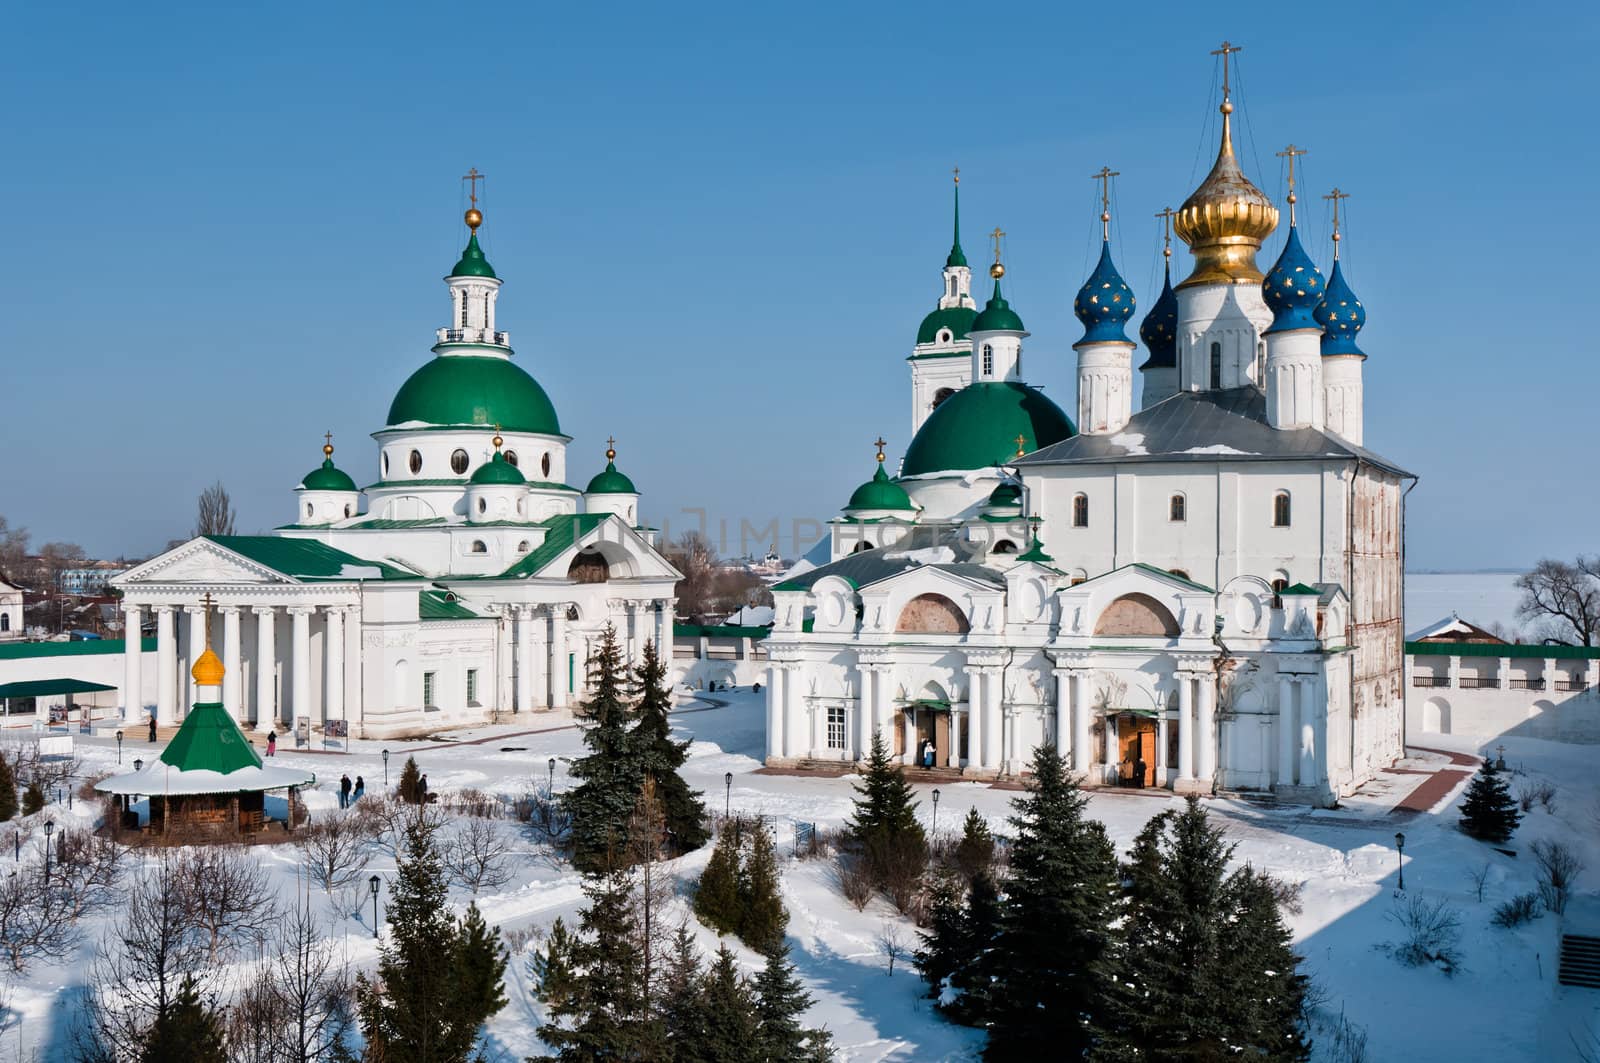 Men monastery in snow by dmitryelagin